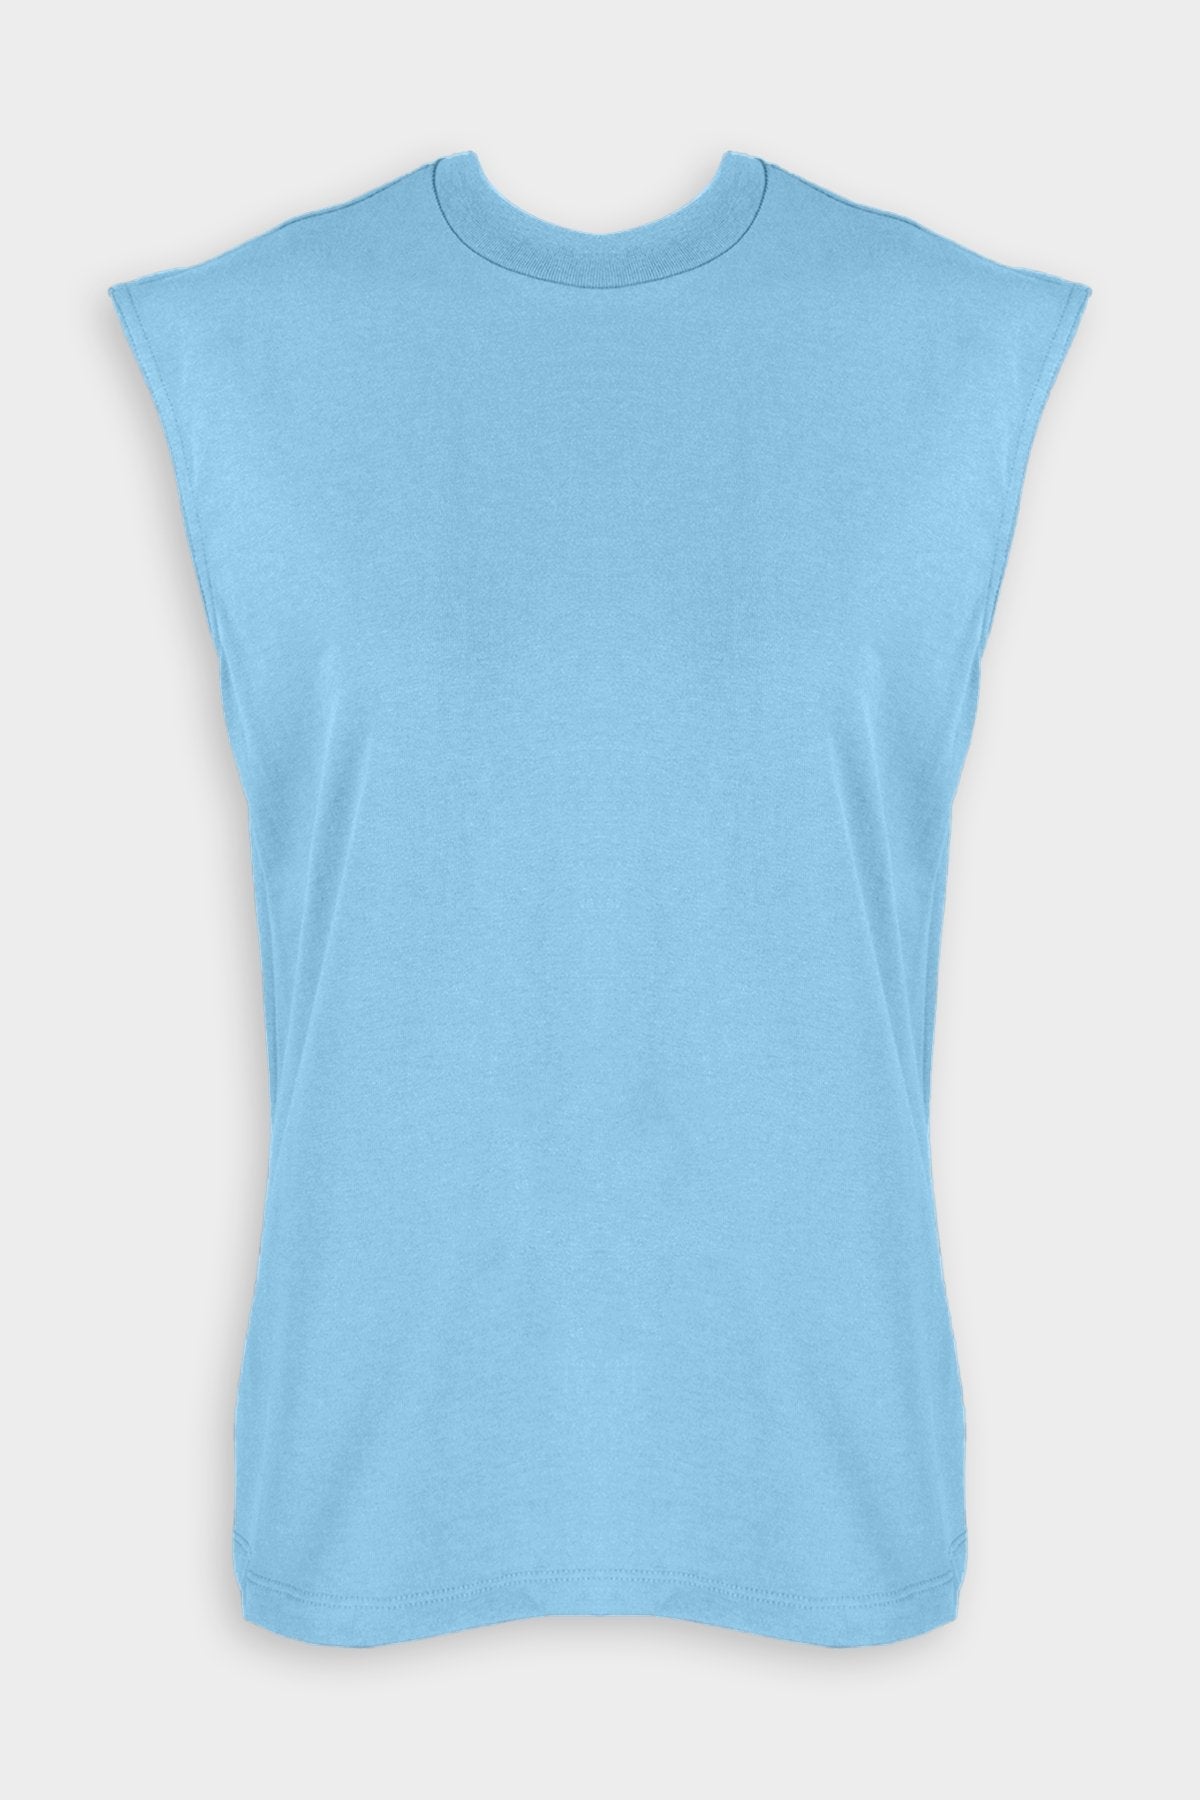 Punto Milano Mockneck T-Shirt in Aquamarine Blue - shop-olivia.com